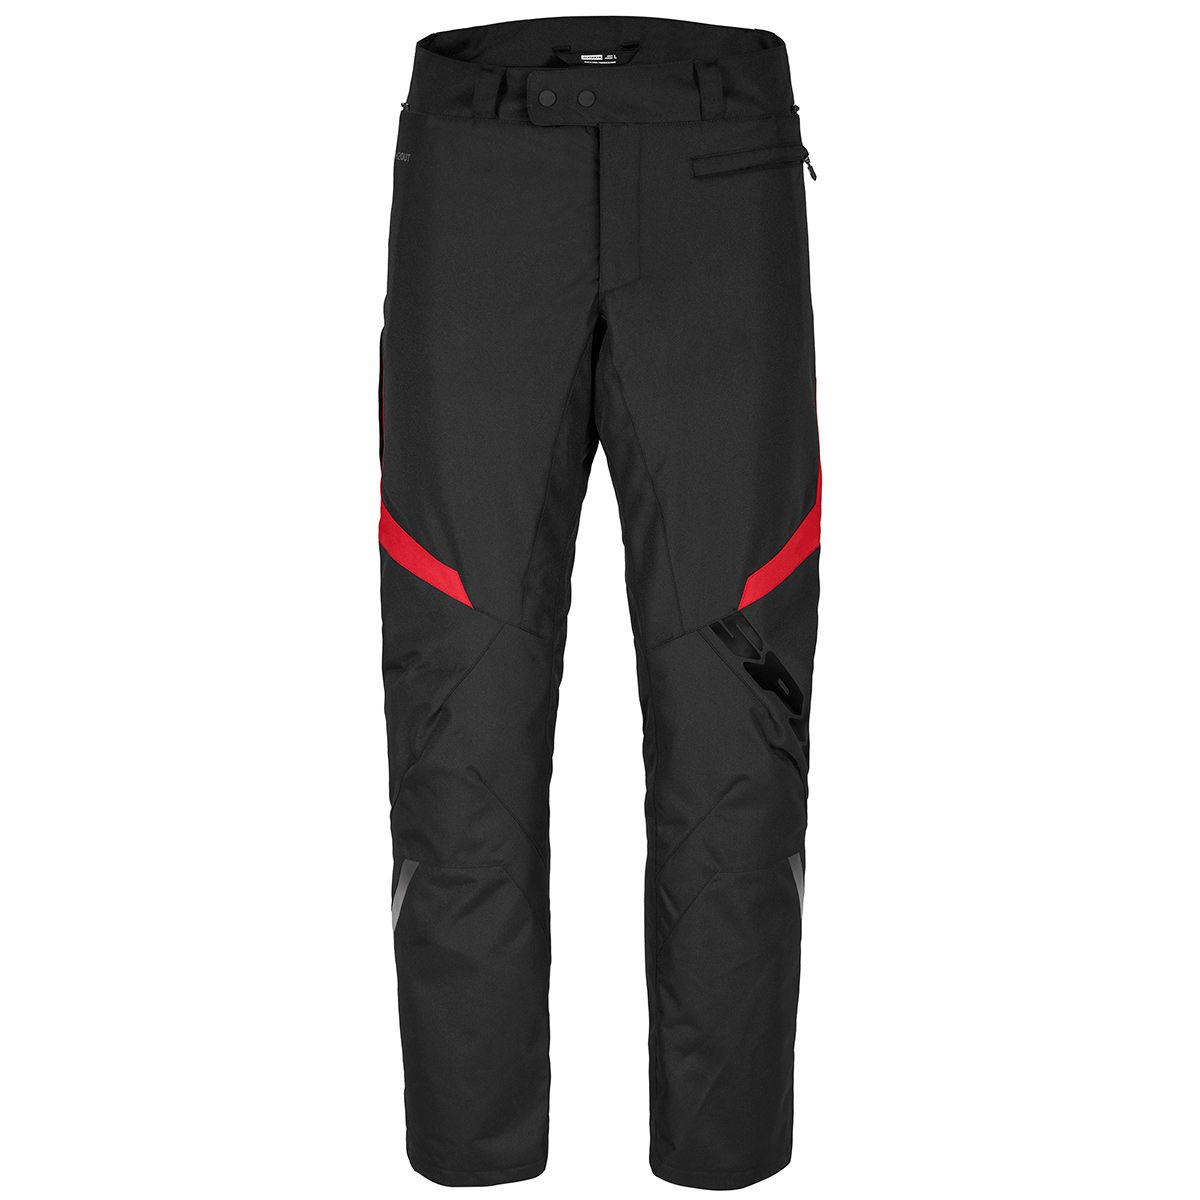 Image of Spidi Sportmaster Pants Black Red Size S EN